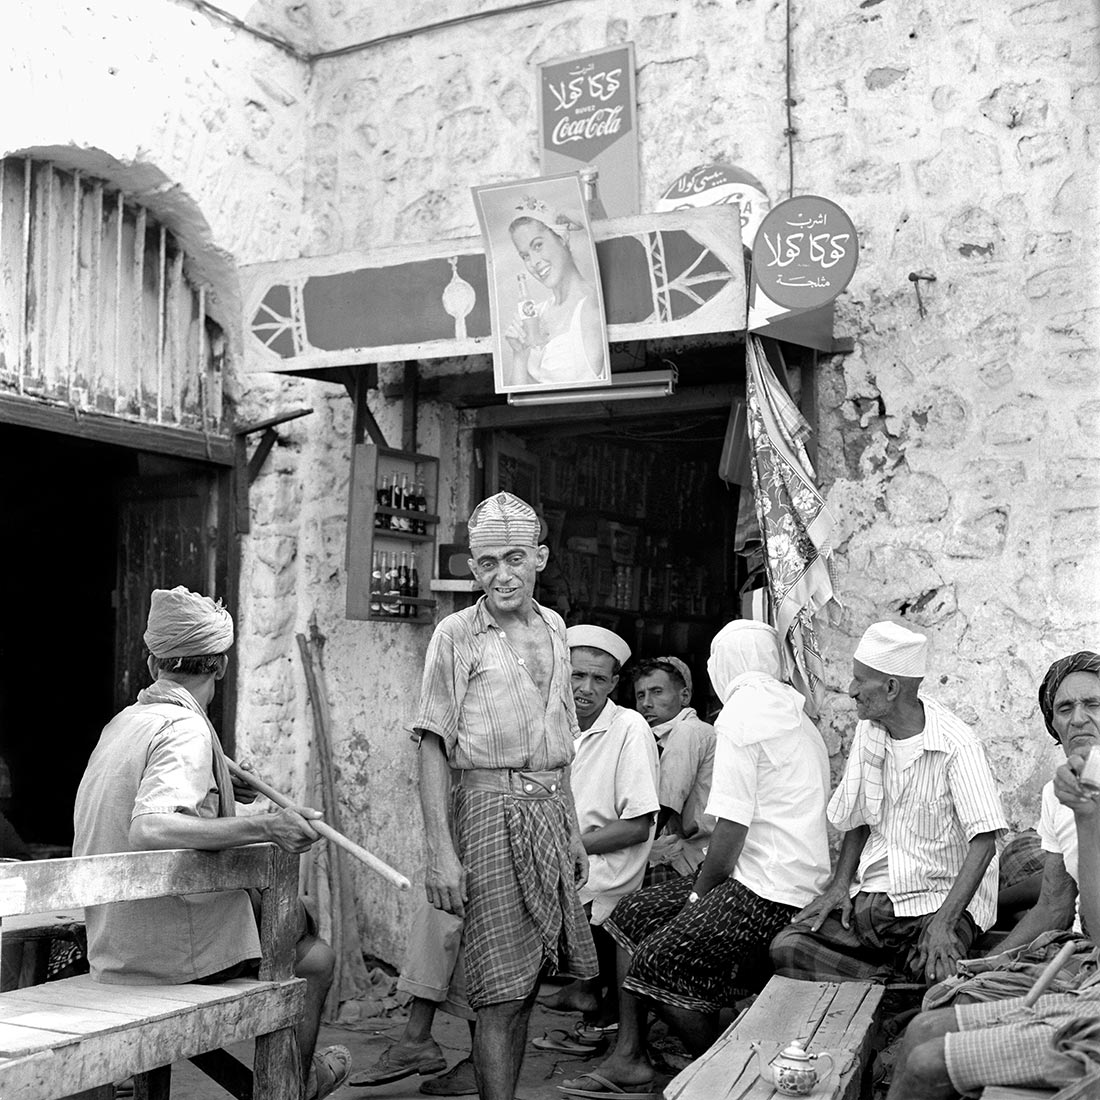 July 10, 1959, Aden, Yemen